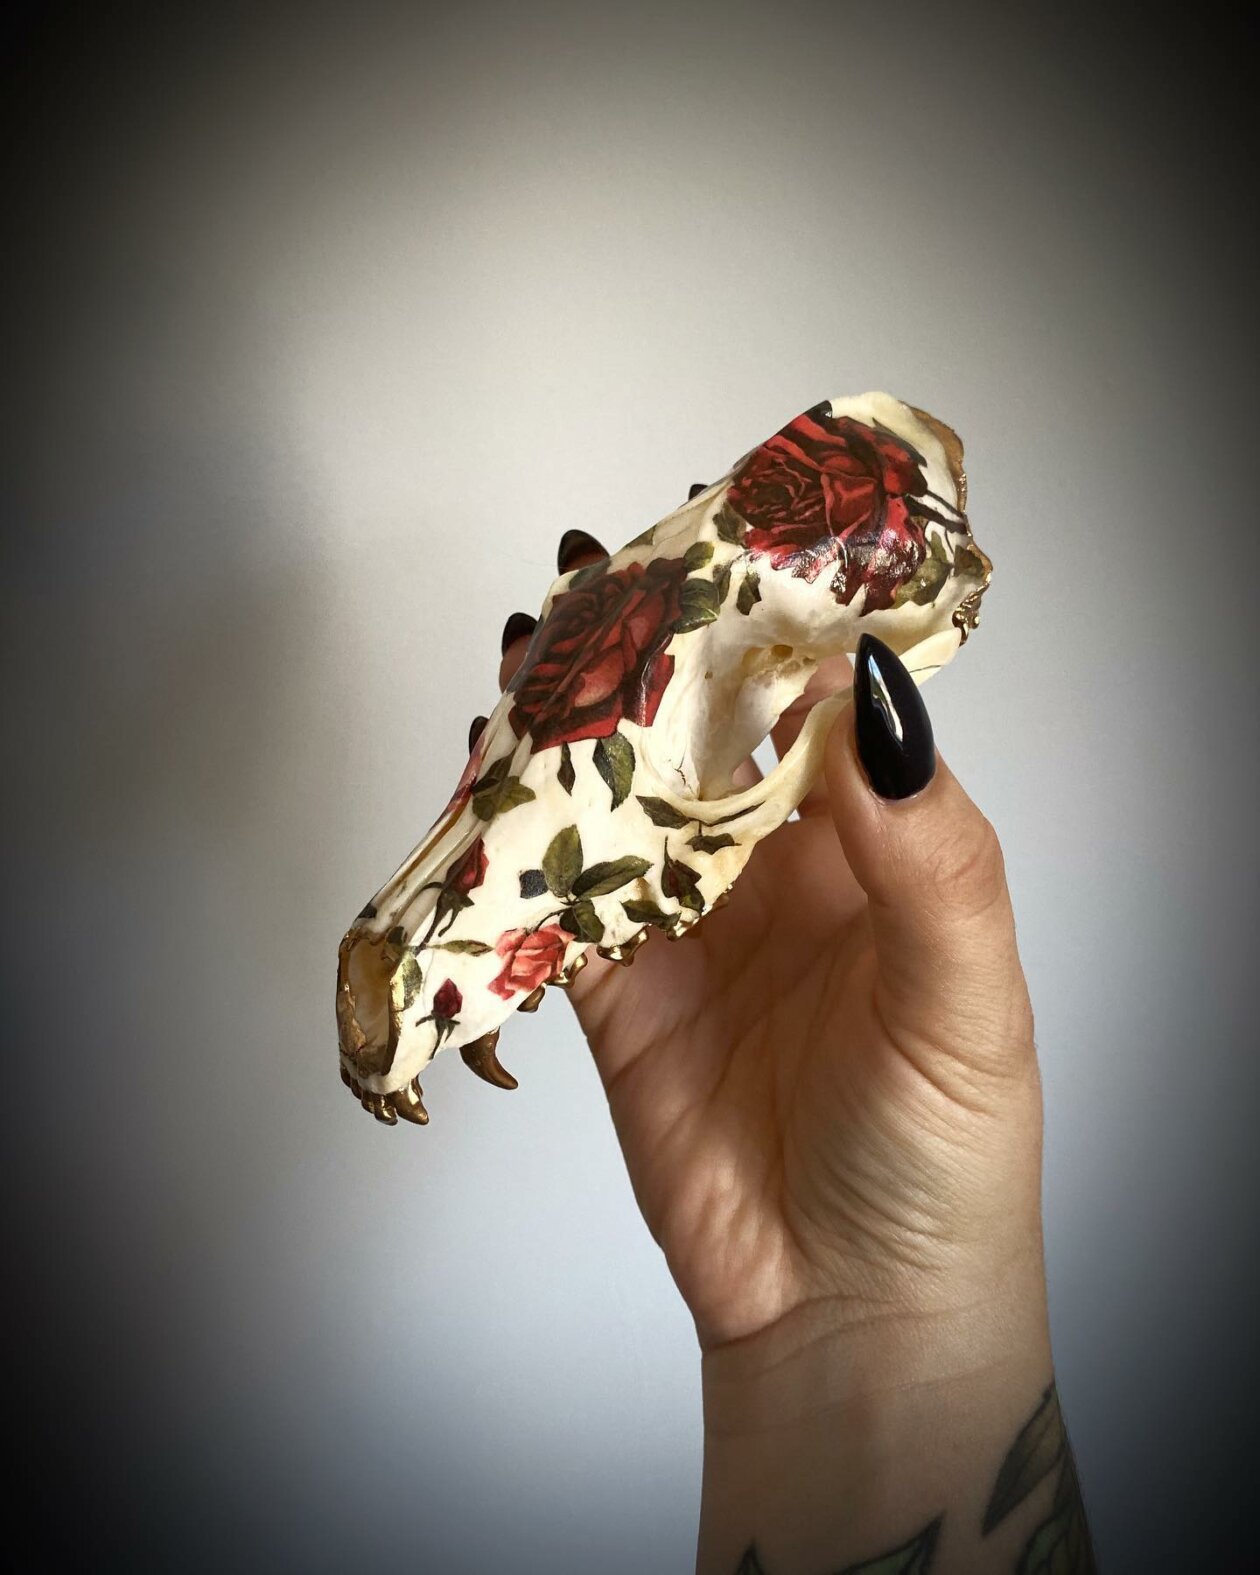 The Floral Decorated Bone And Skull Art Of Emmanuelle Jobidon (23)